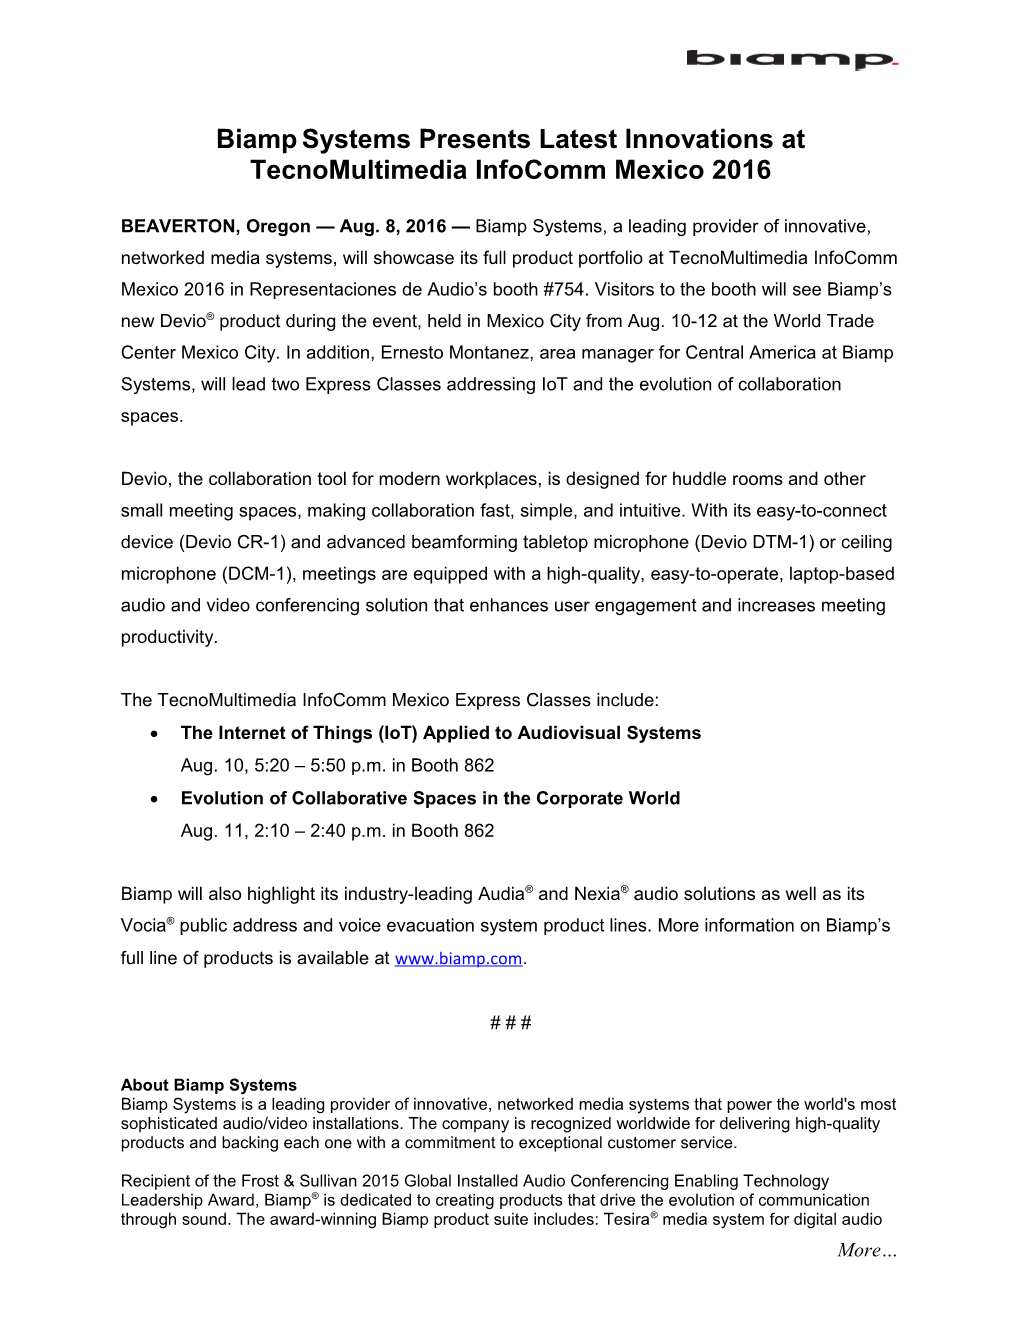 Biampsystems Presents Latest Innovations at Tecnomultimedia Infocomm Mexico 2016